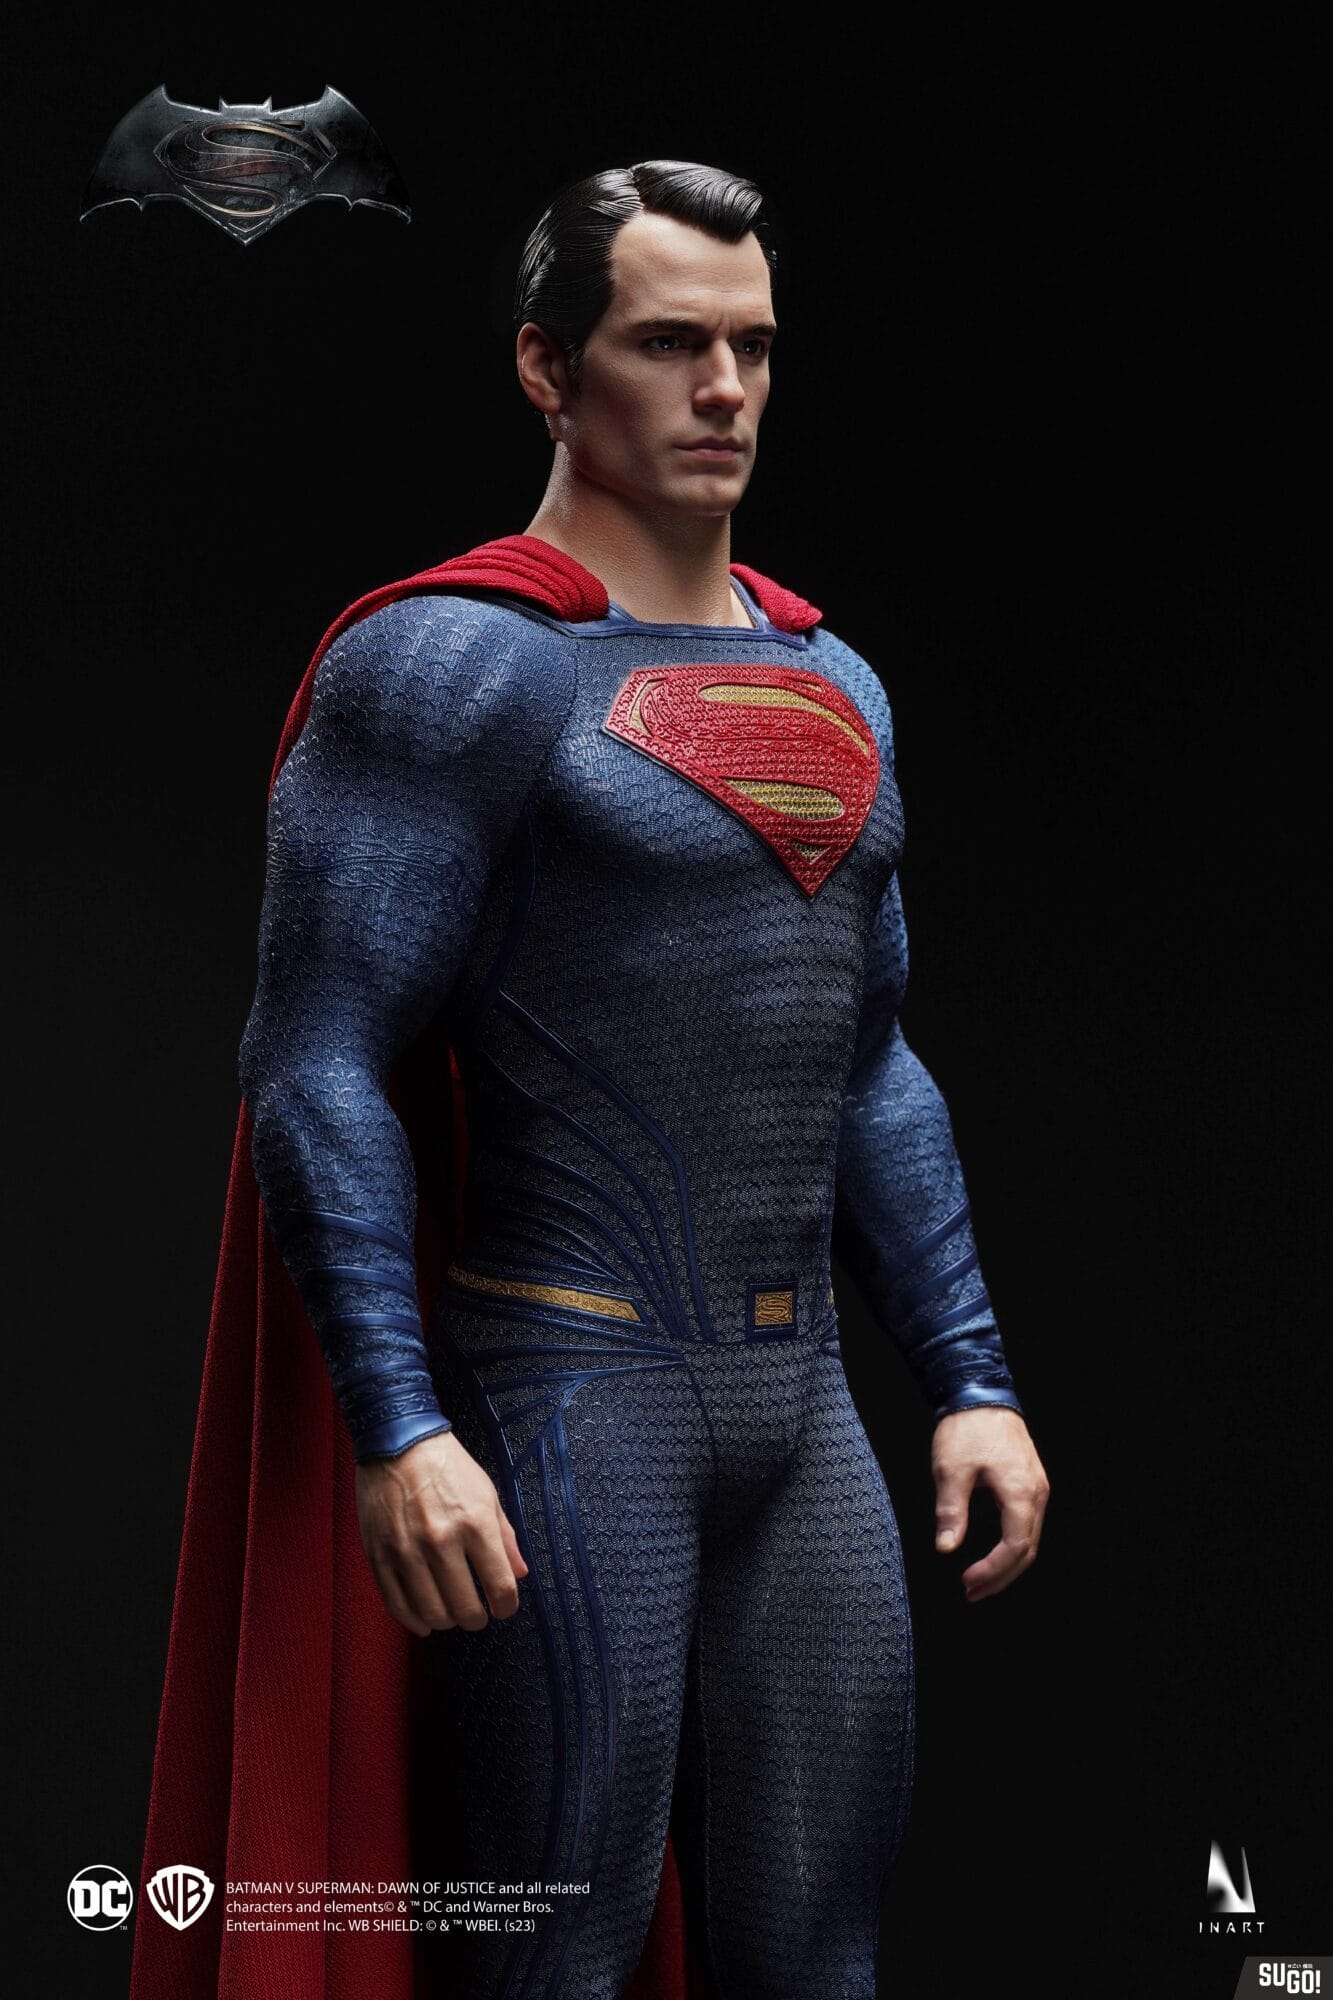 Superman vs The Flash DC Battle Resin Statue - McFarlane Toys Store